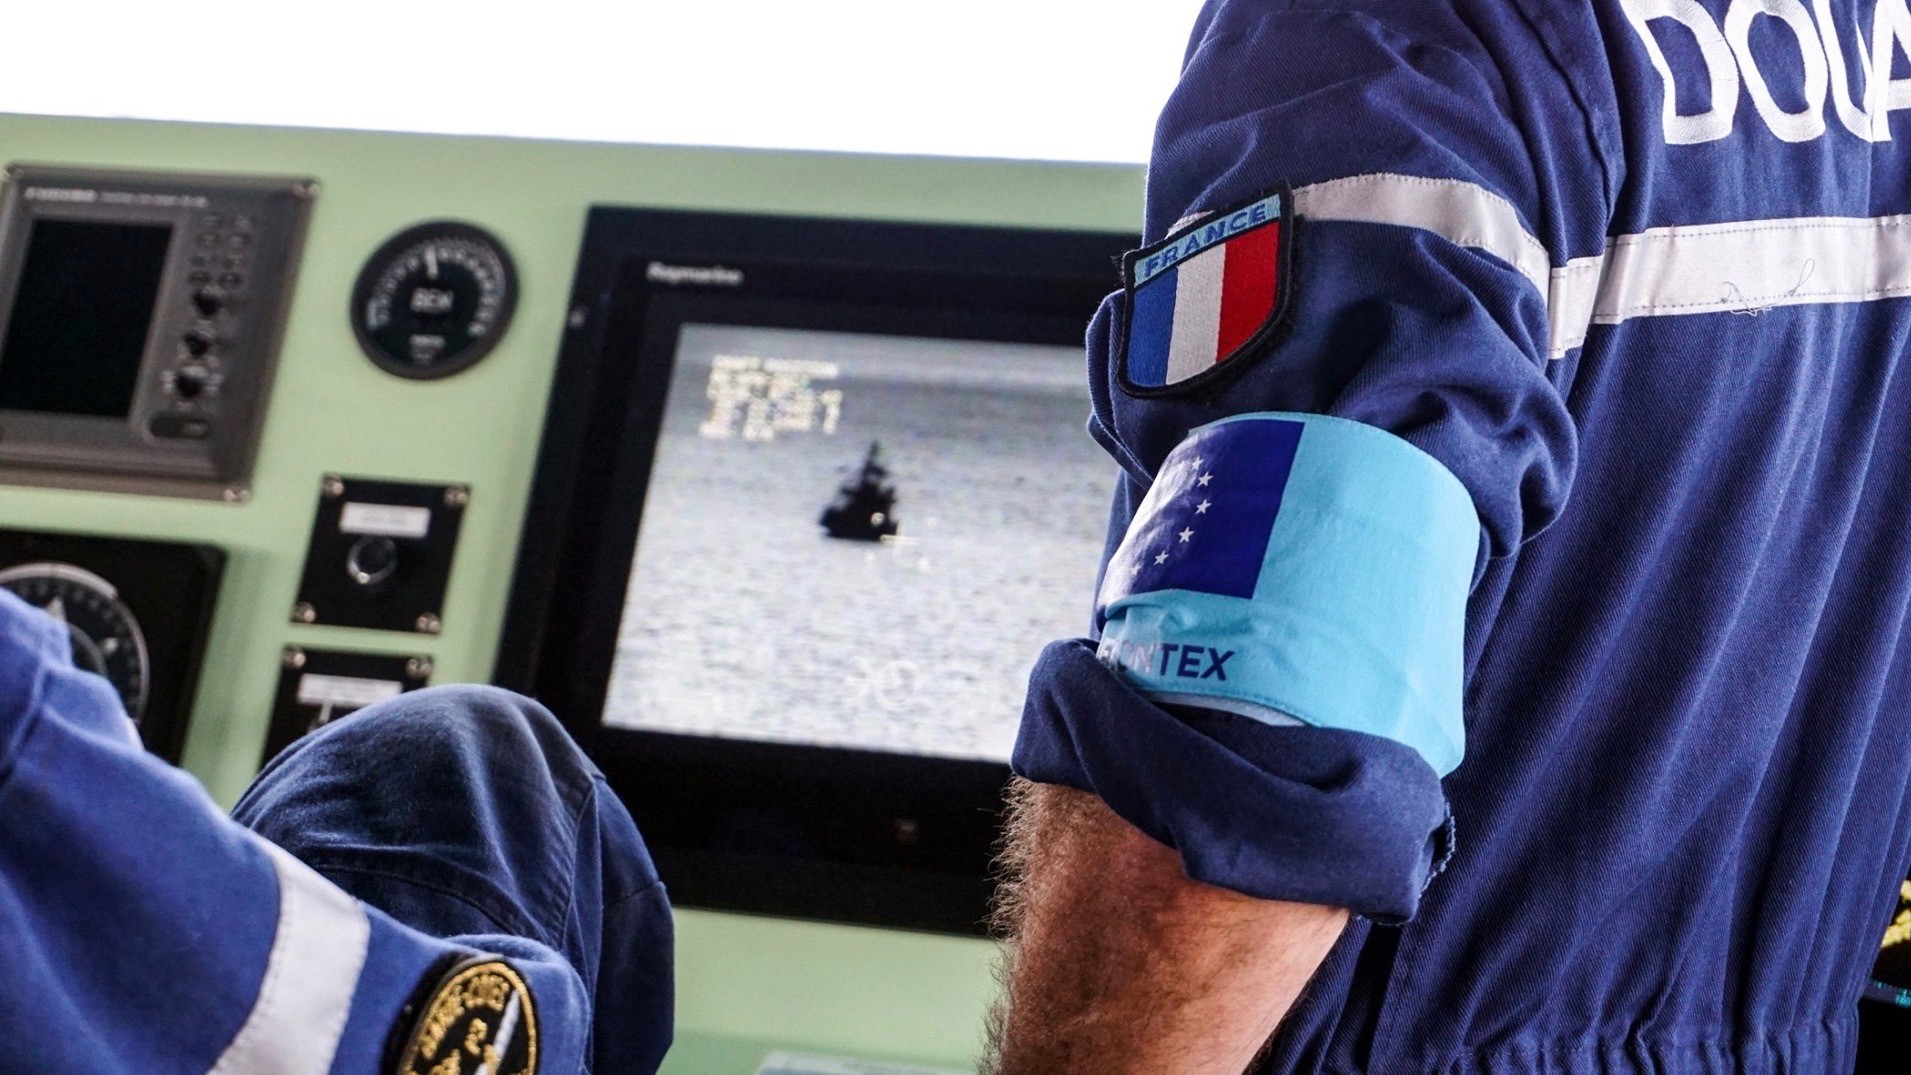 Fot. Frontex, the European Border and Coast Guard Agency/Facebook